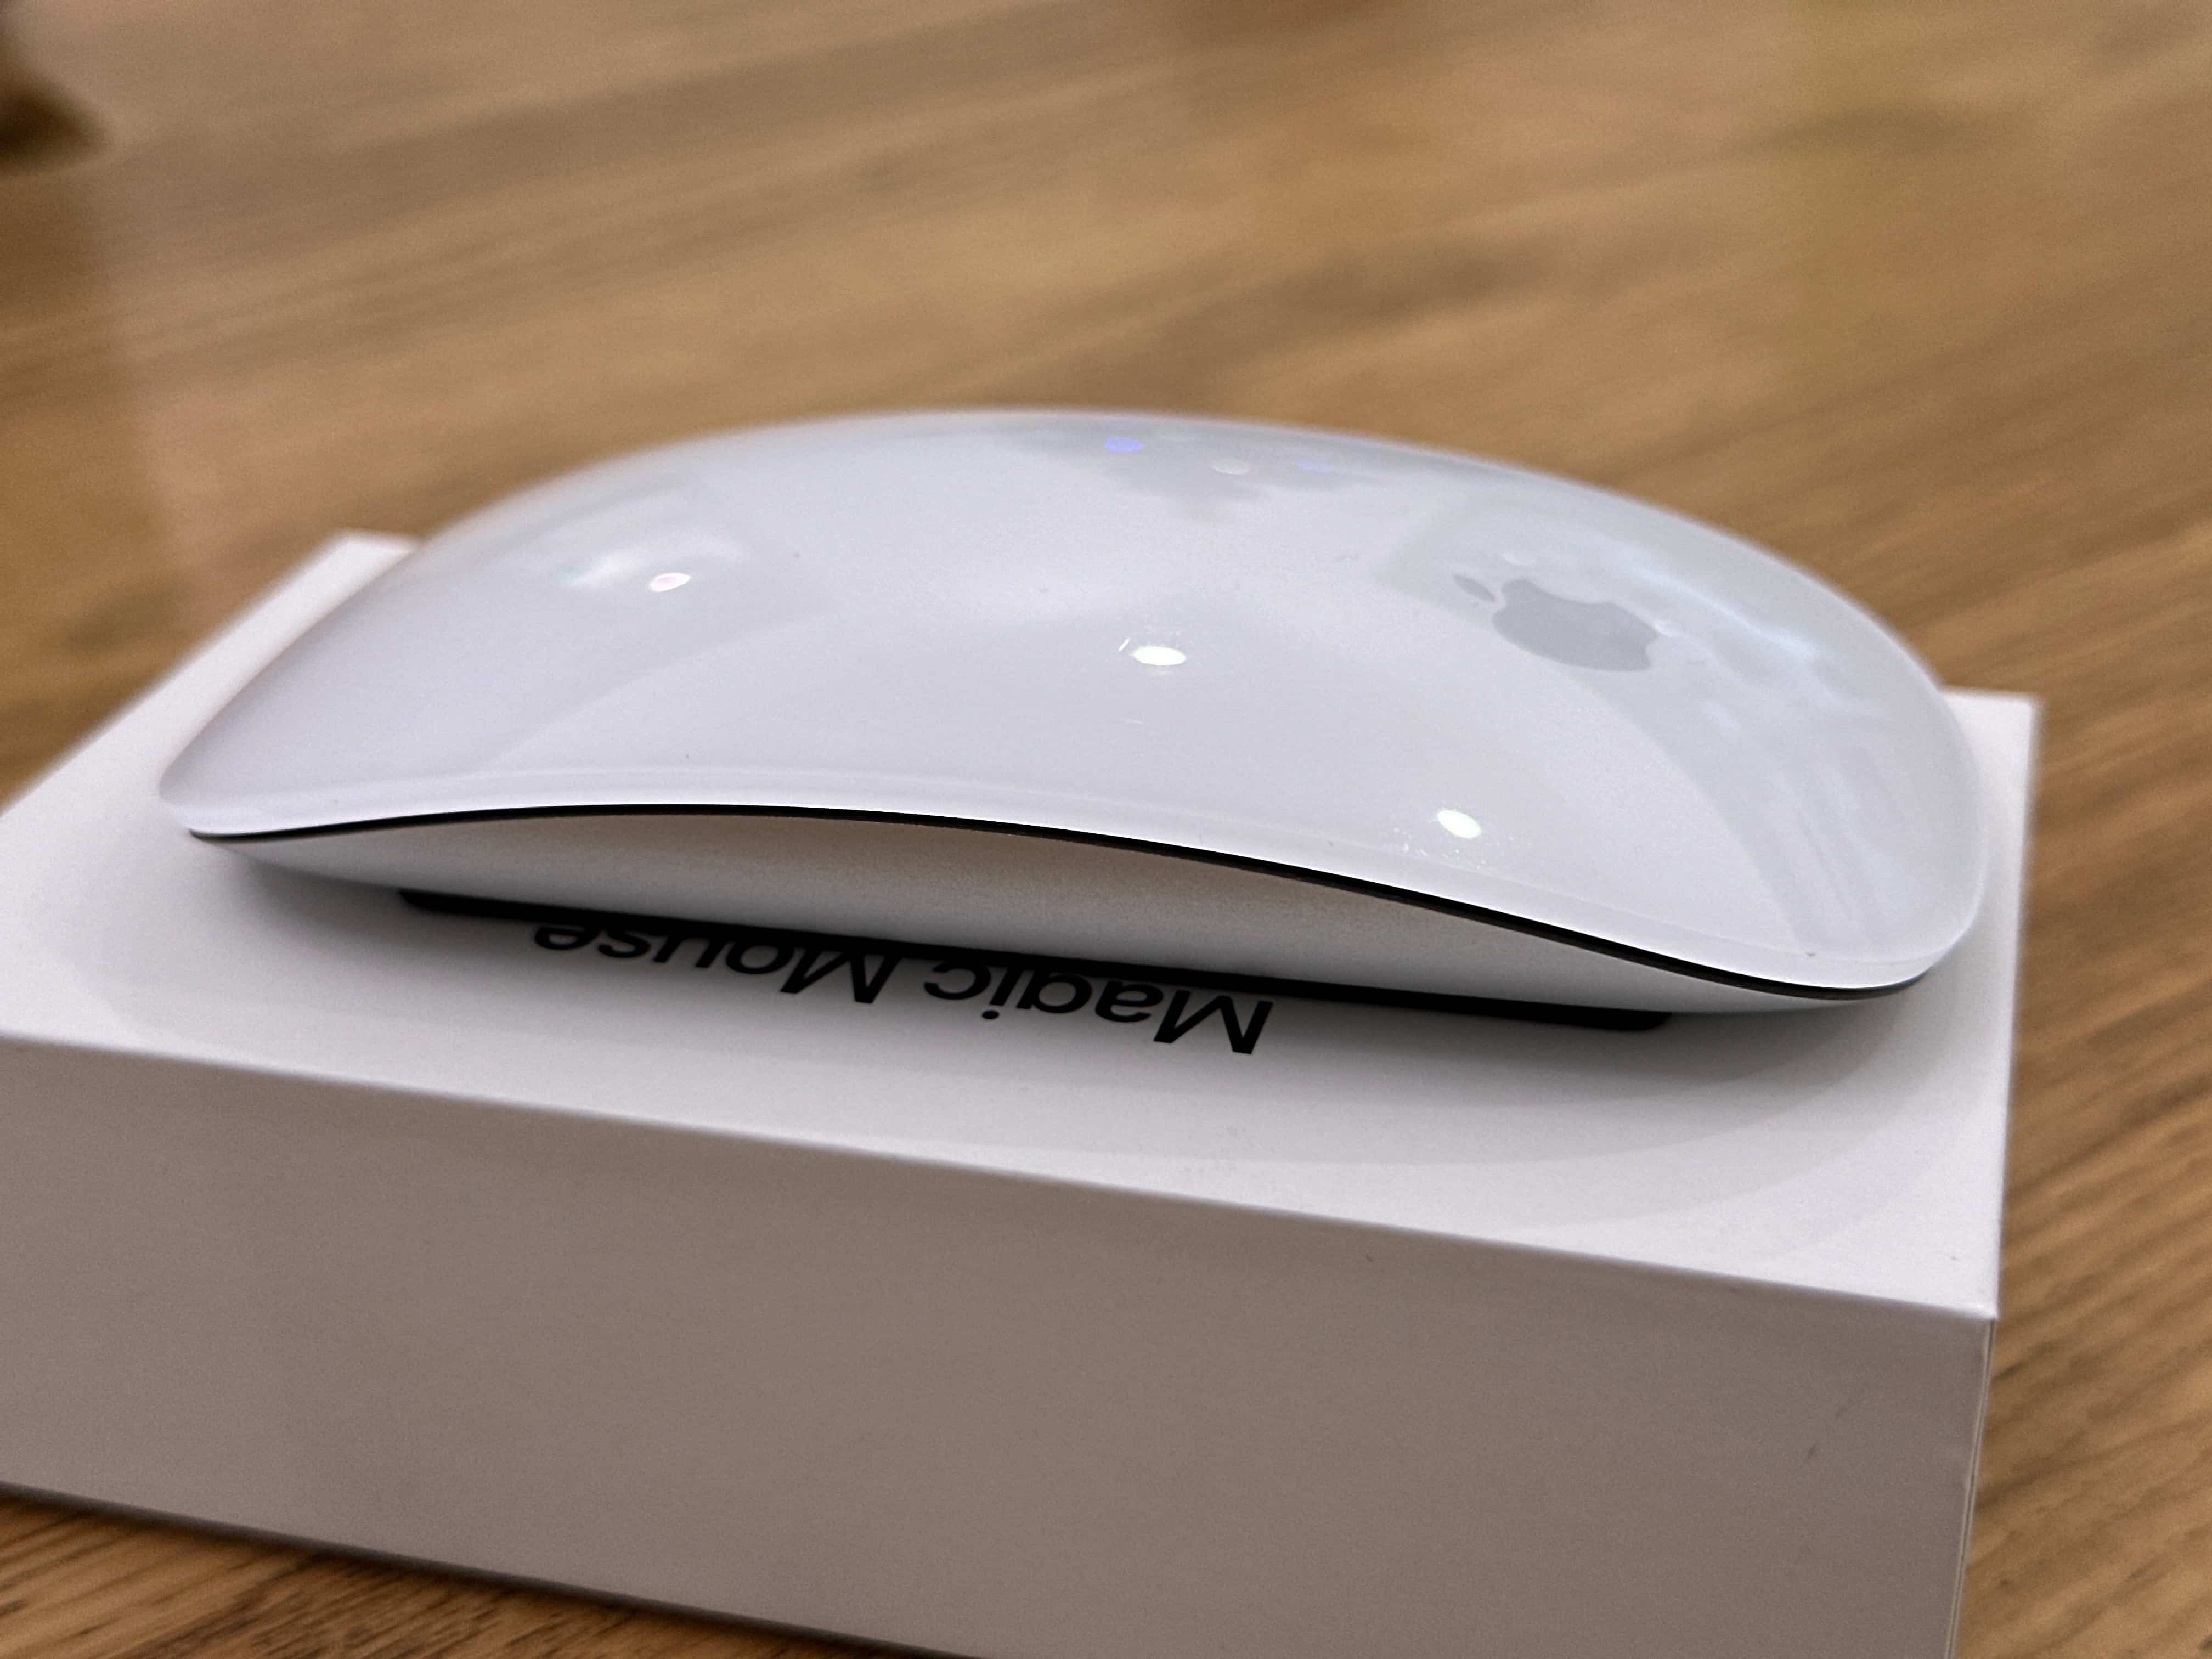 Мышь Apple Magic Mouse 2, серебристый